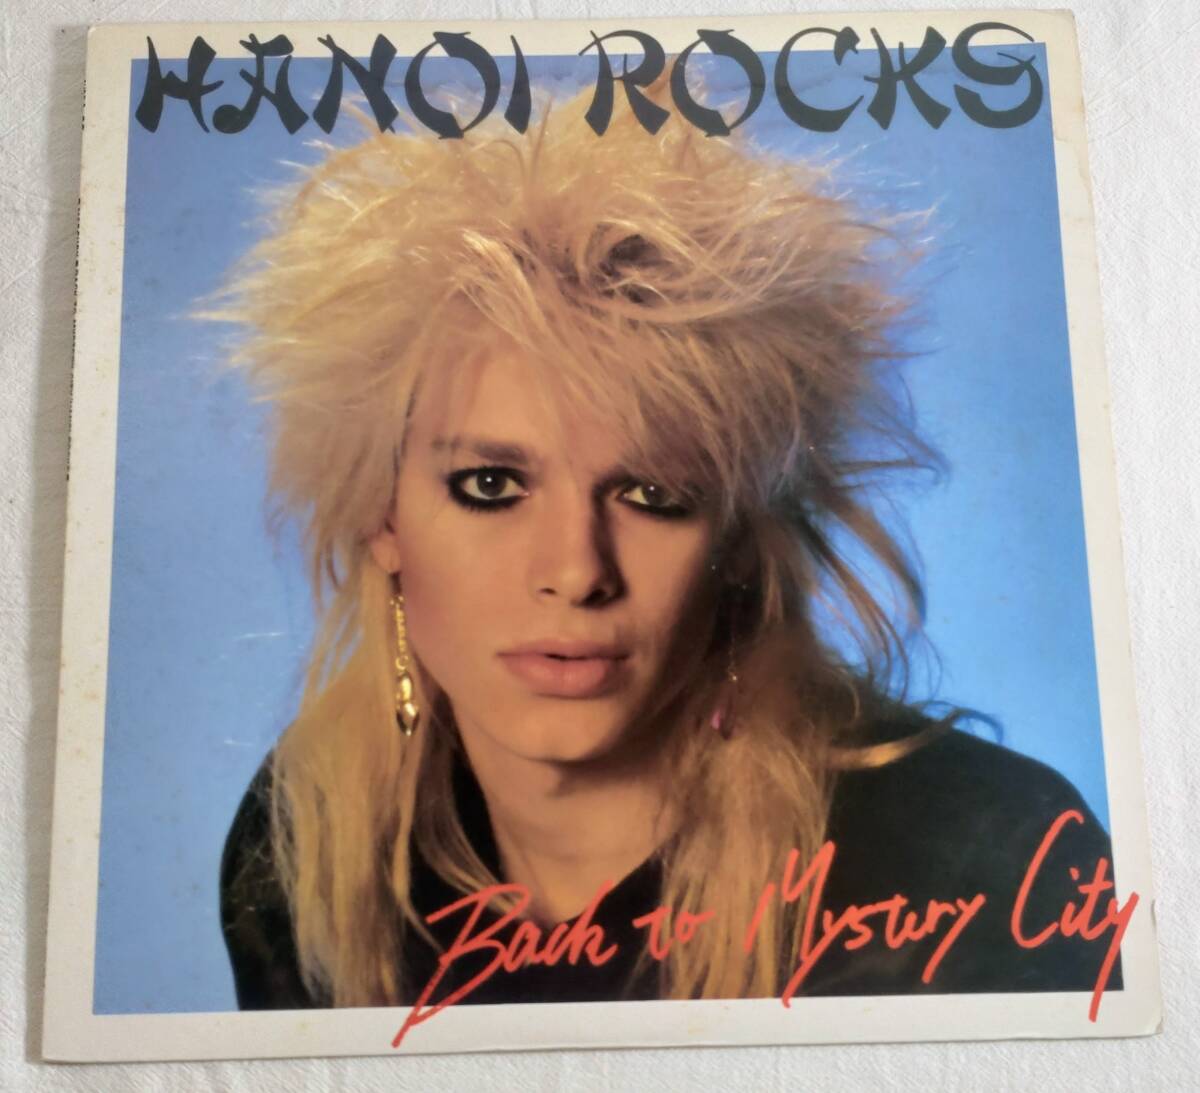  HANOI ROCKS/BACK TO MYSTERY CITY/ハノイ ロックス /ミステリーシティー 日本盤 LP Record レコード_画像1